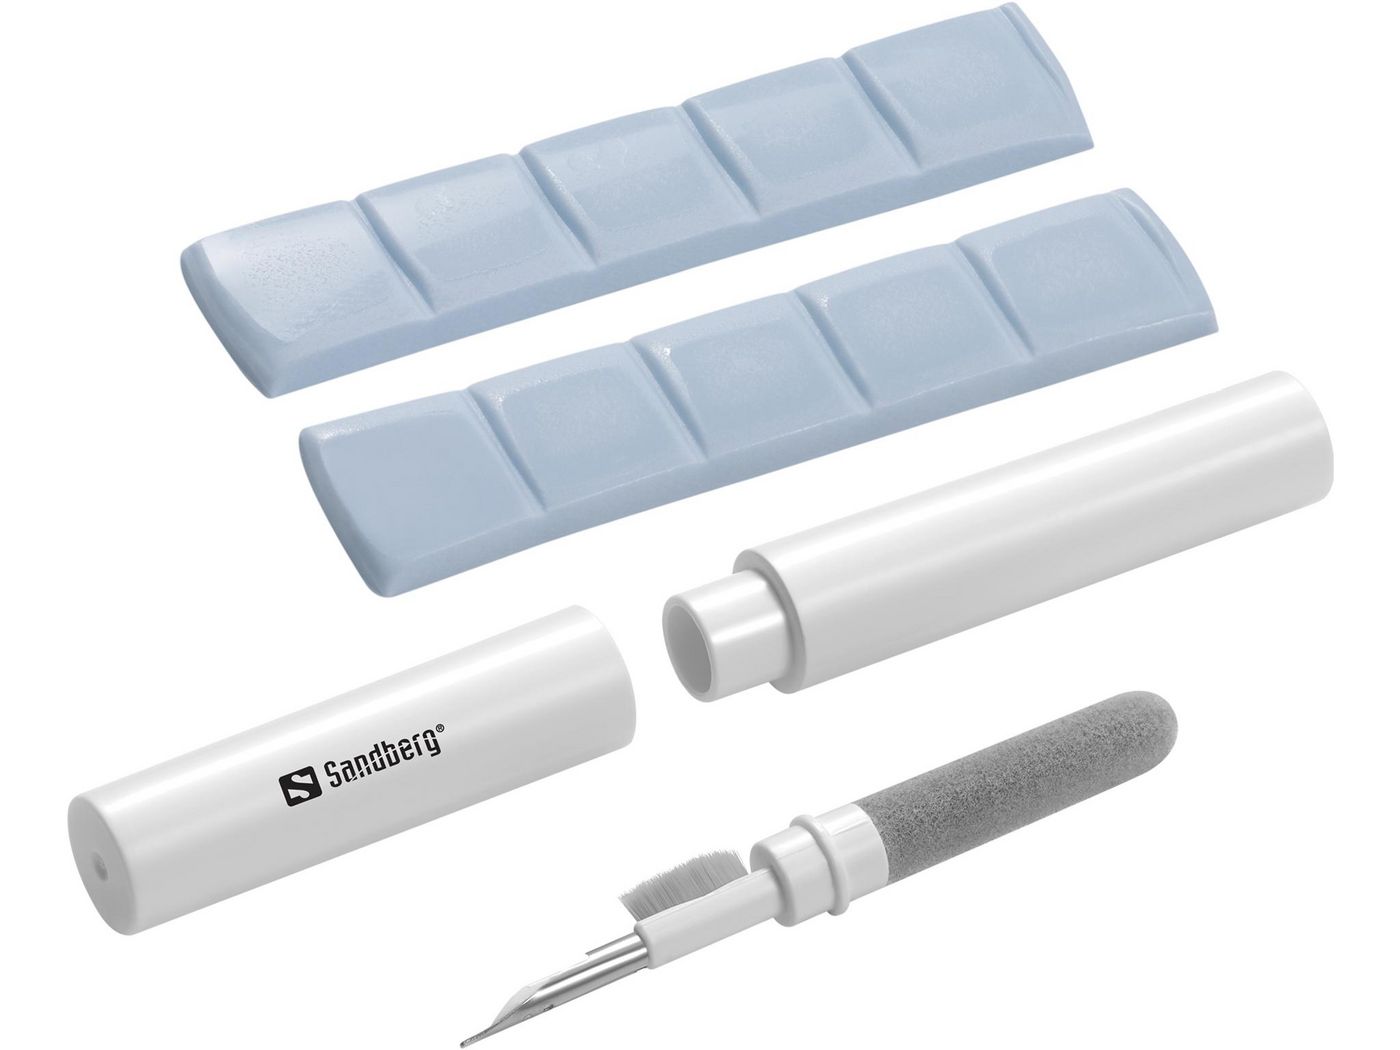 Sandberg 470-32 Cleaning Pen Kit for Airpods 